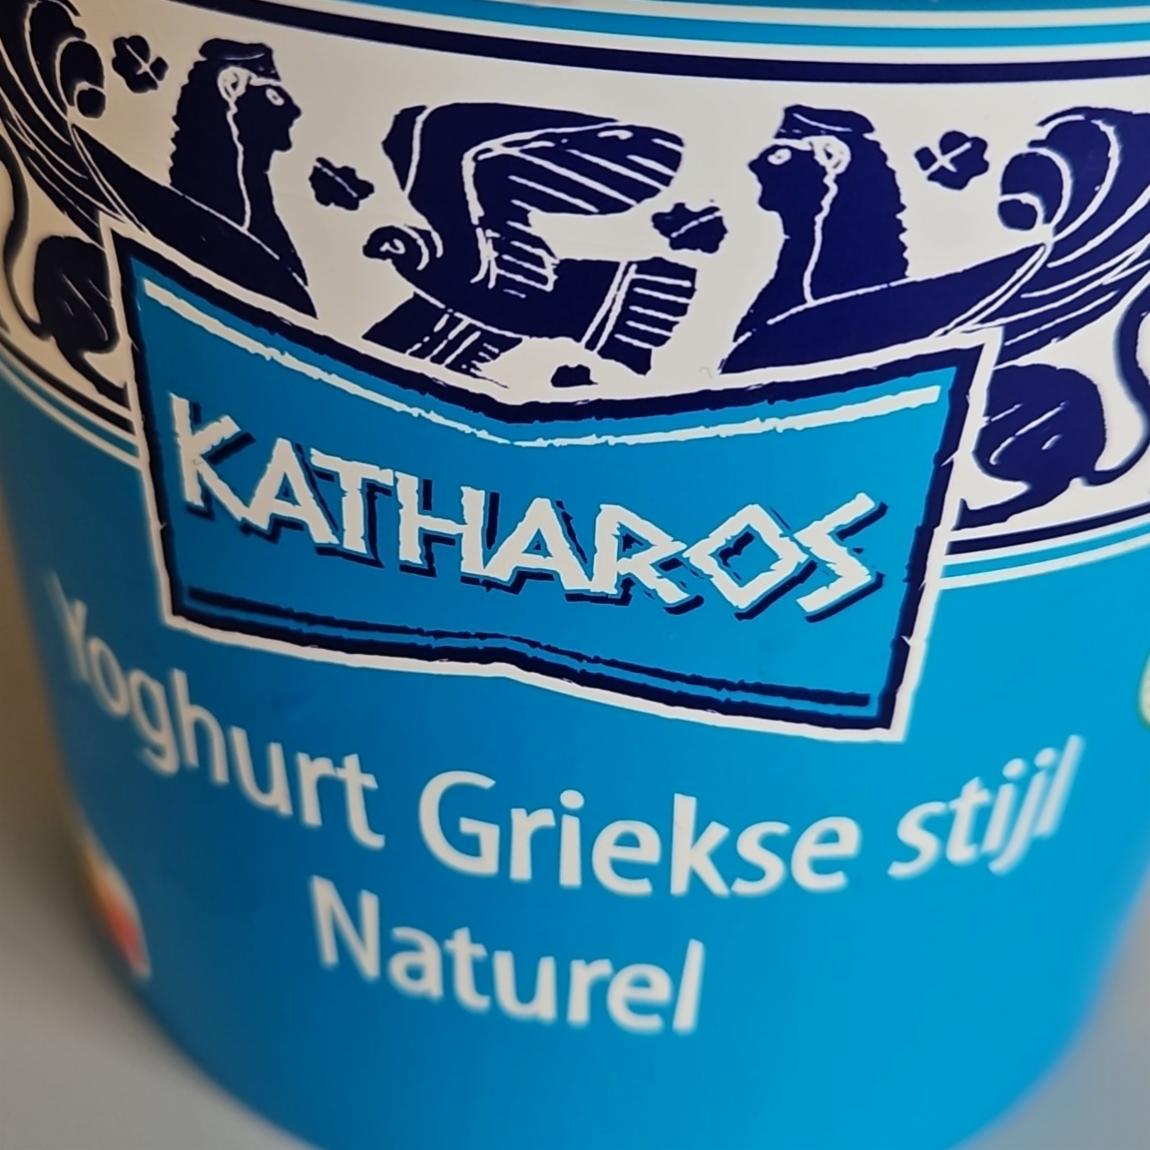 Fotografie - Yoghurt Griekse stijl Naturel Katharos